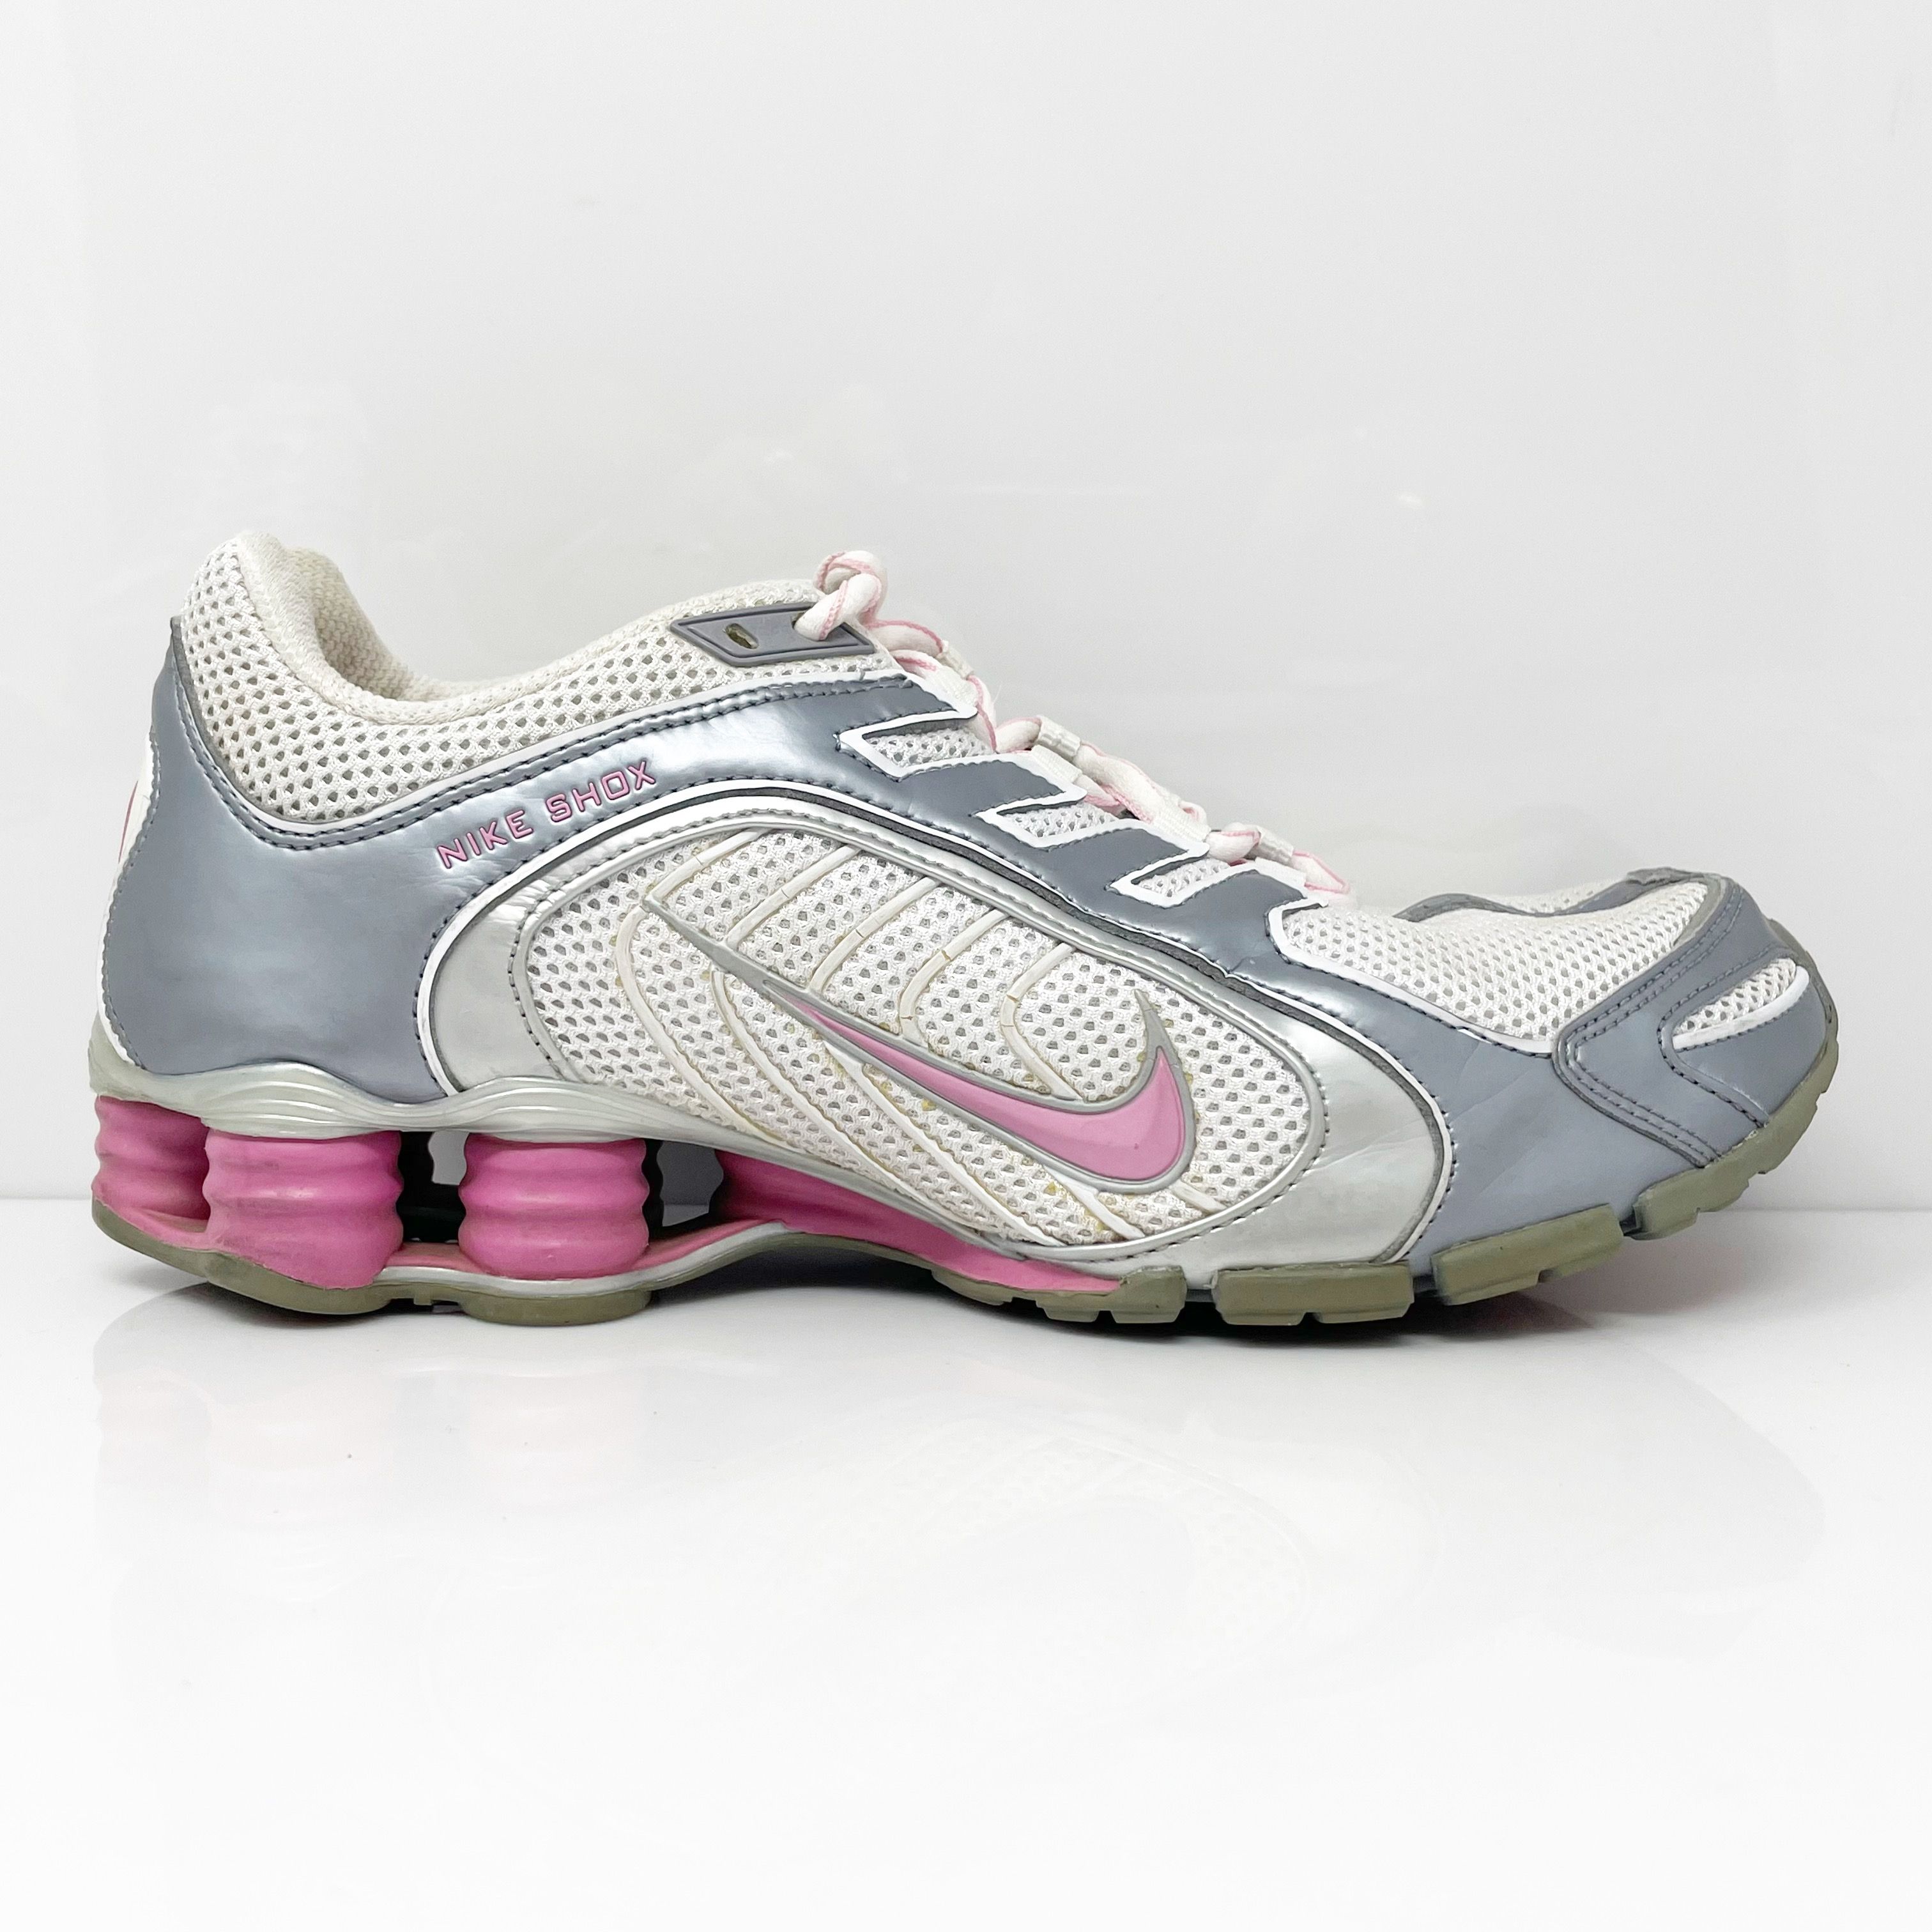 Tahití Oxidado comedia Nike Womens Shox Navina 313809-166 White Running Shoes Sneakers Size 7.5 |  eBay